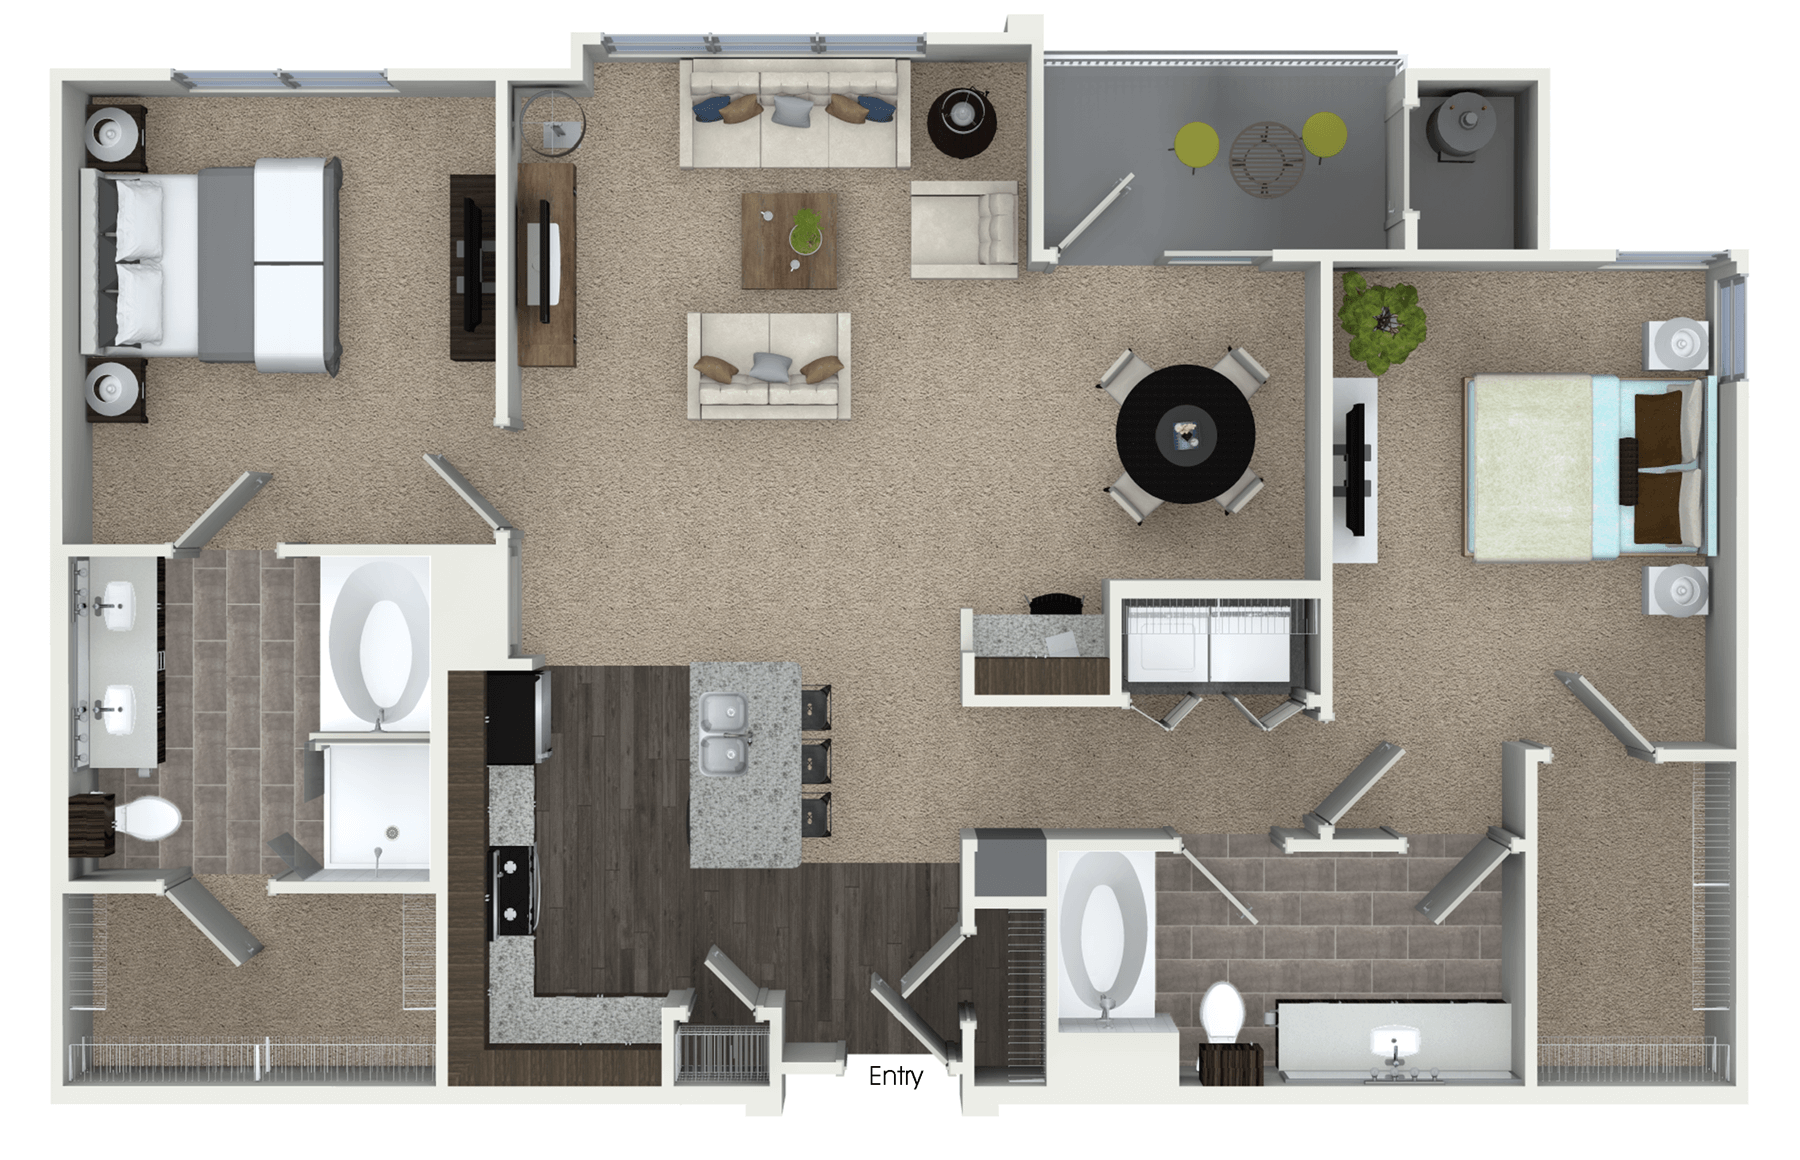 Floorplan for Apartment #4202, 2 bedroom unit at Halstead Marlborough